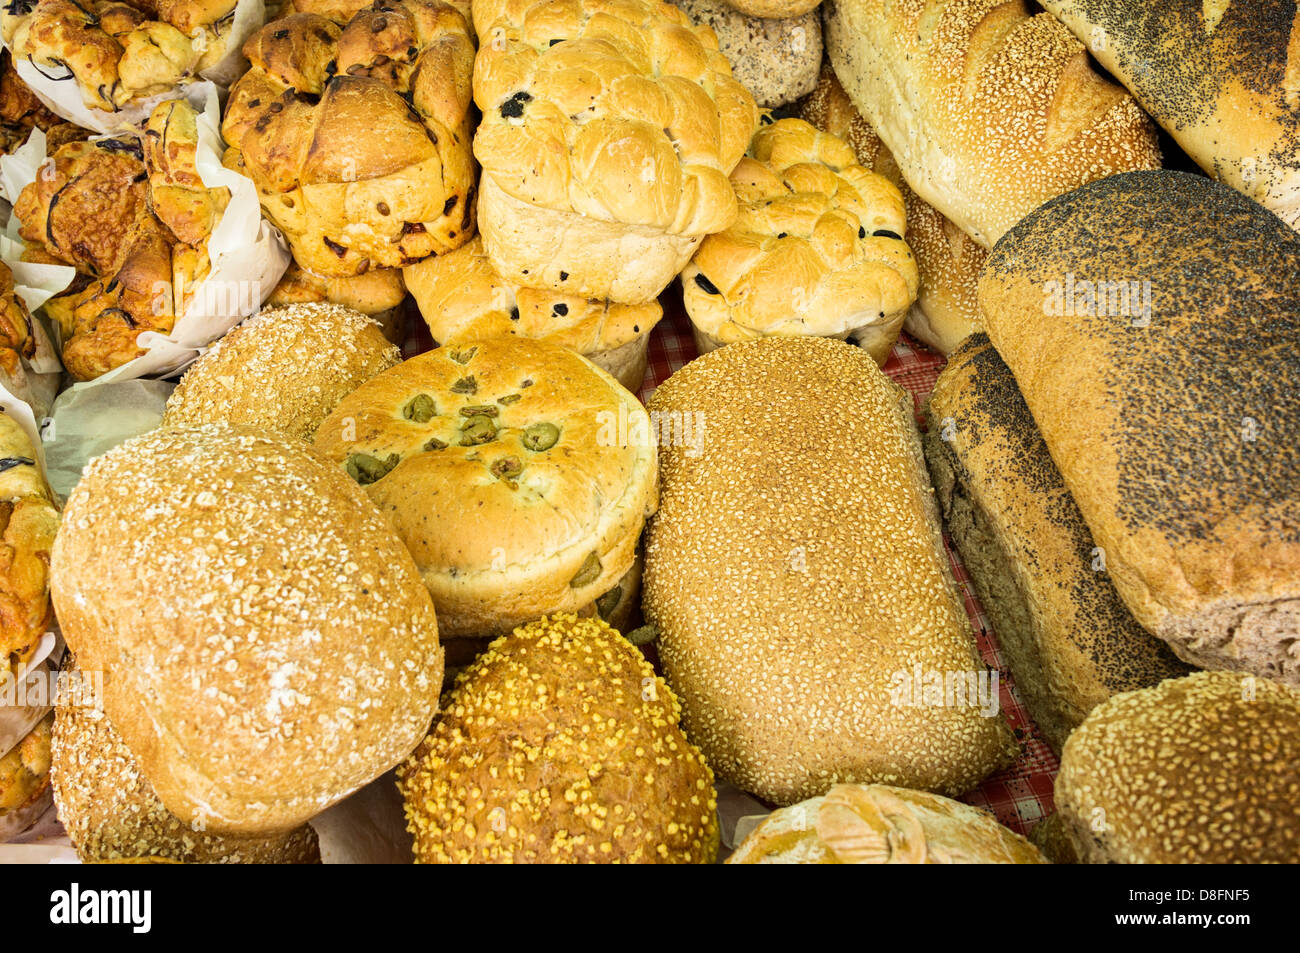 Brot auf einem Markt Stall, England, UK Stockfoto